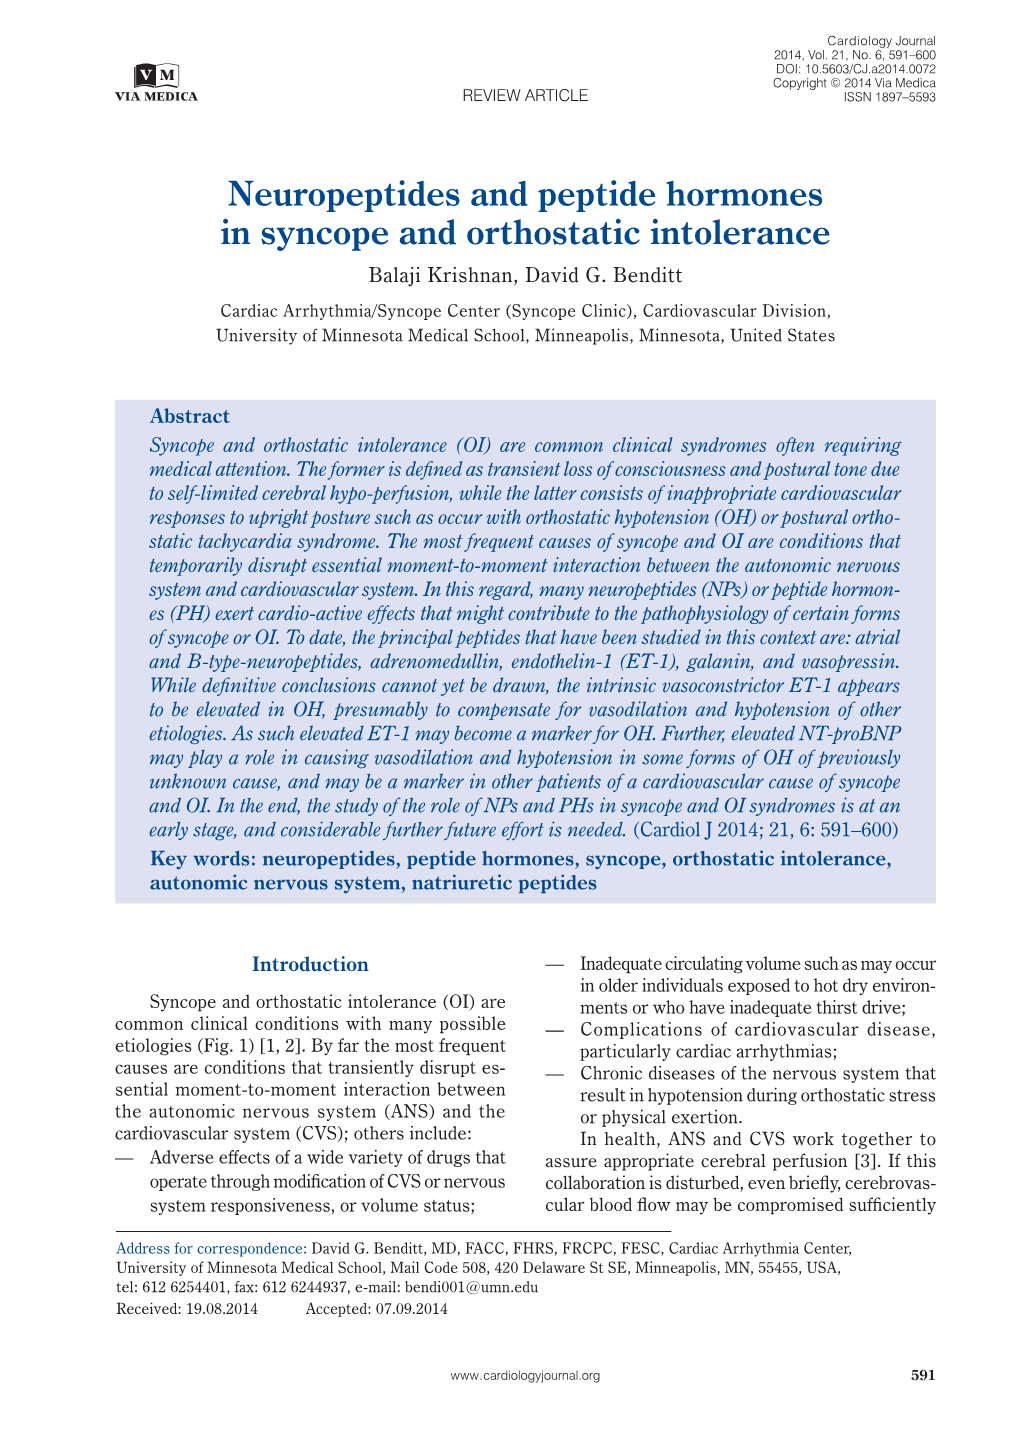 Neuropeptides and Peptide Hormones in Syncope and Orthostatic Intolerance Balaji Krishnan, David G